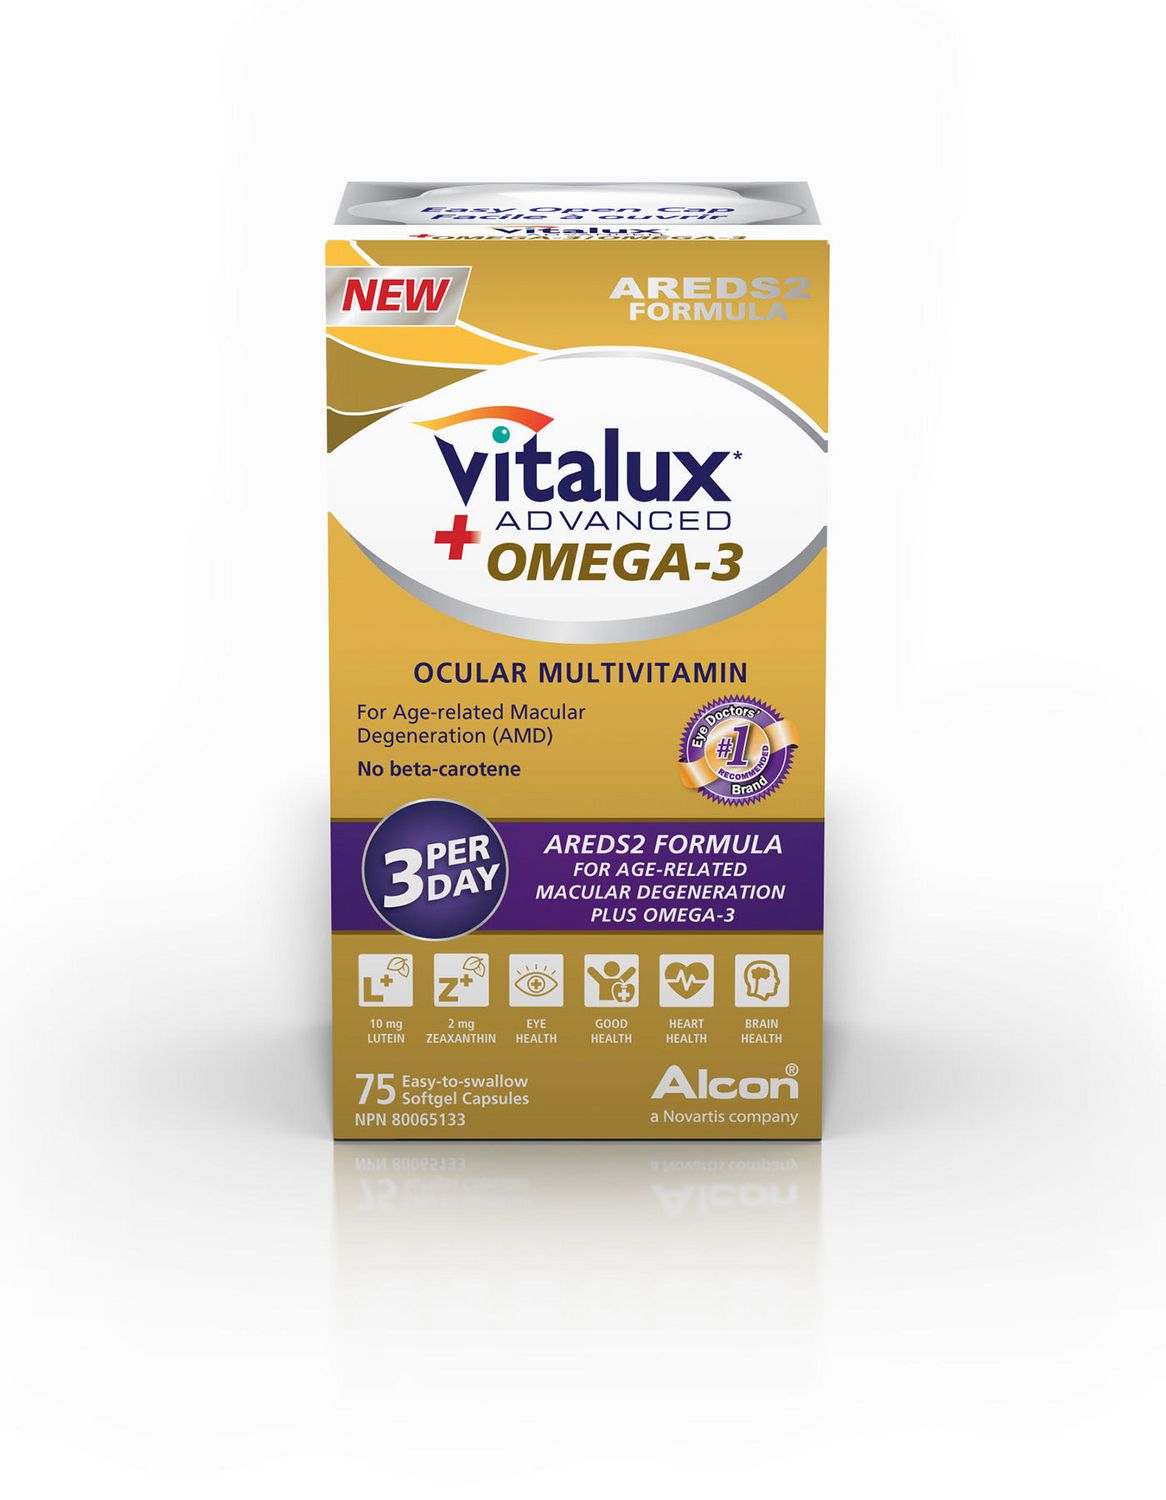 Vitalux Advanced + Omega-3 Ocular Multivitamin Areds2 Formula 75 Easy-to-Swallow Capsules